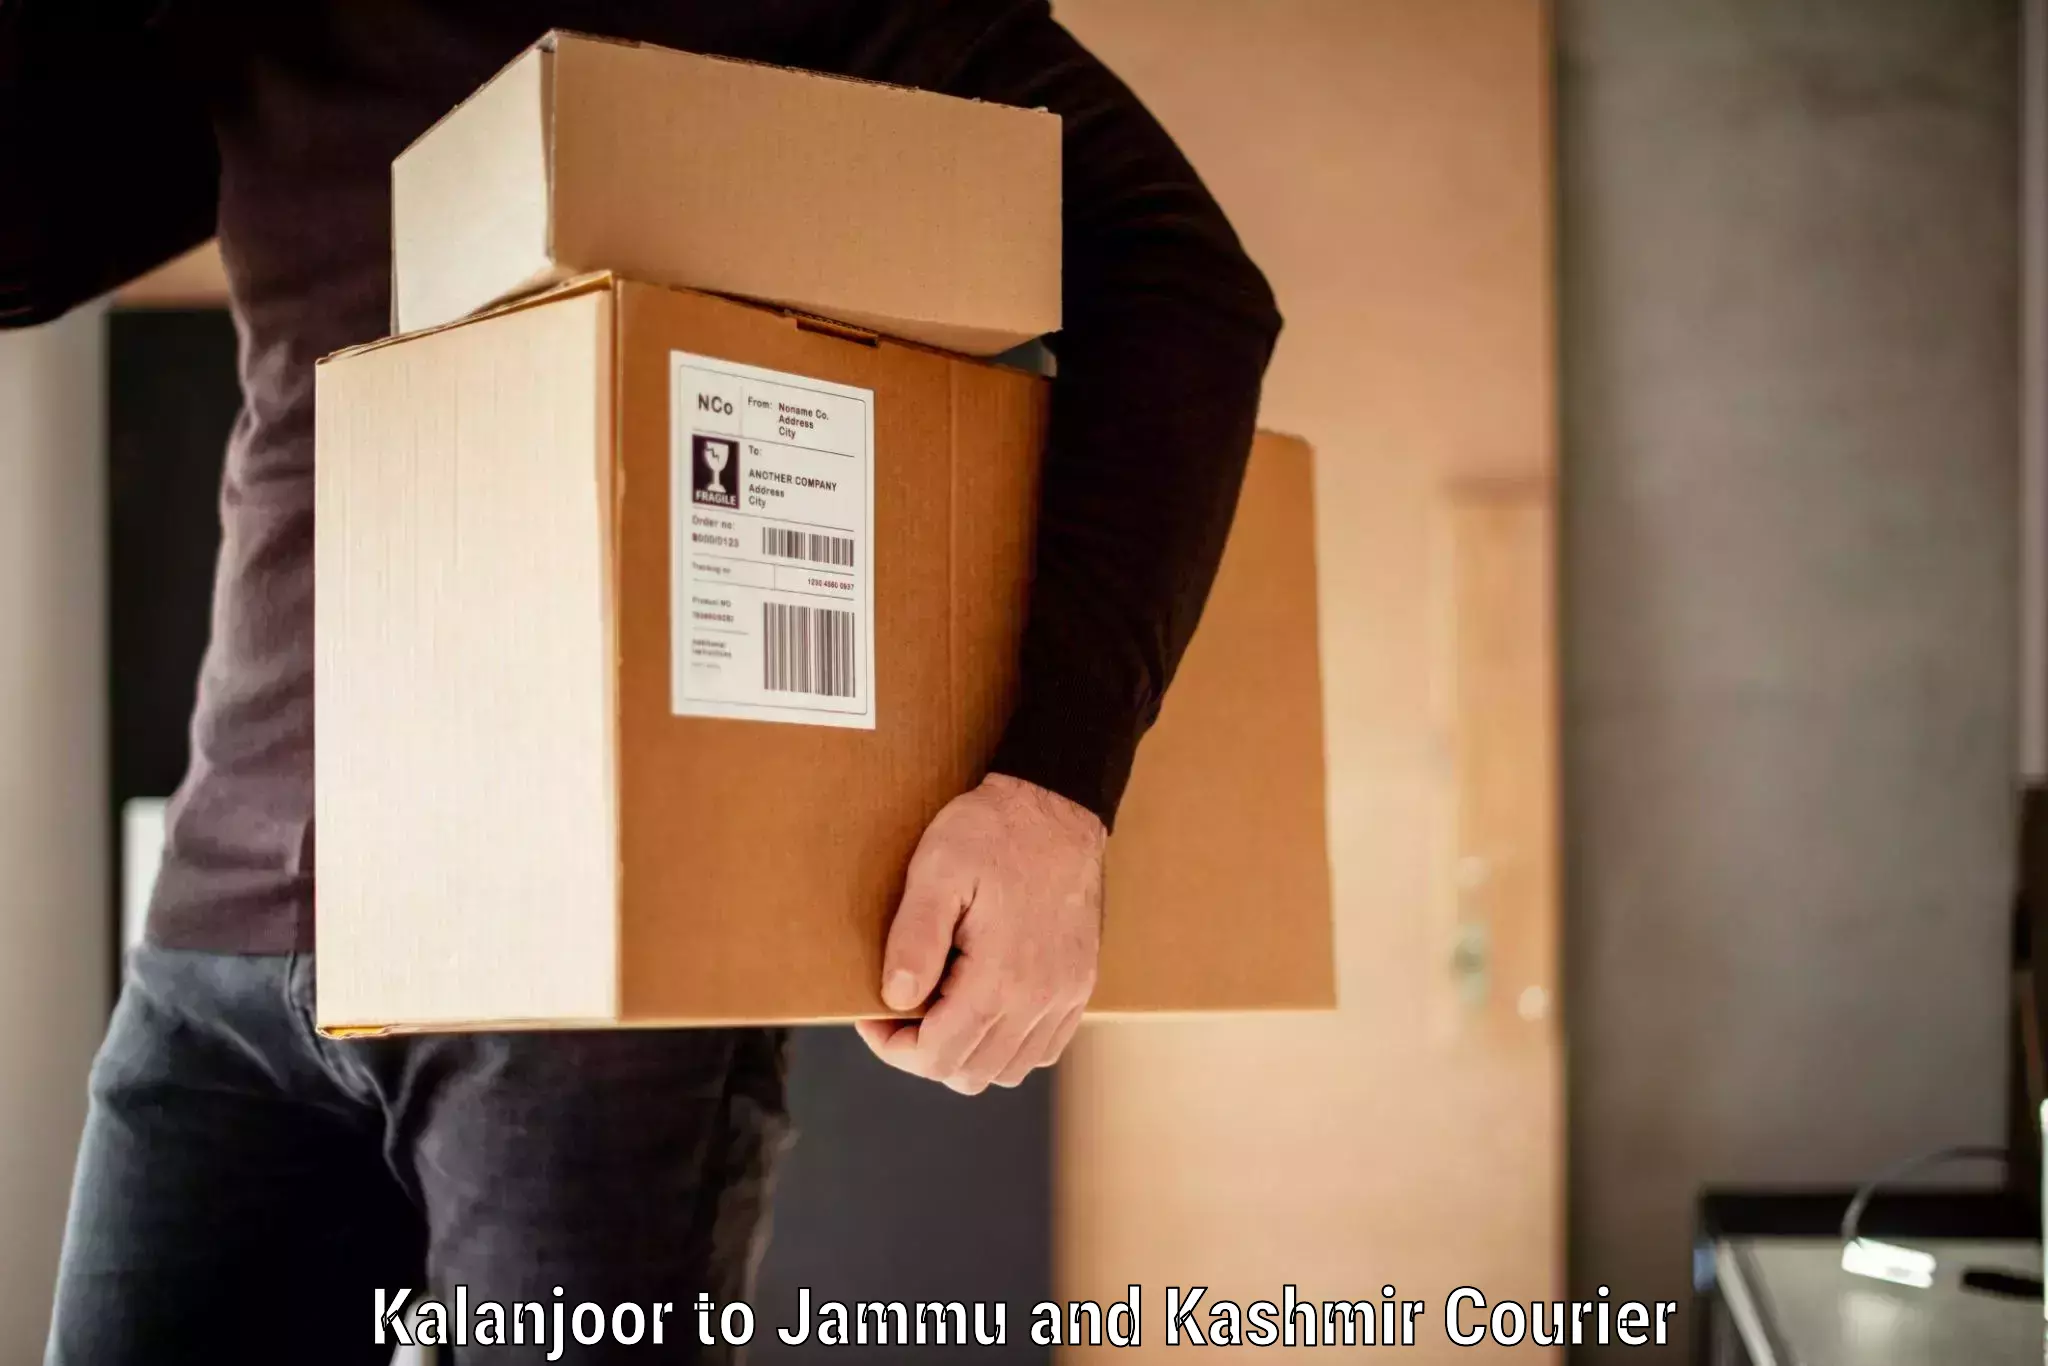 Baggage transport network Kalanjoor to Jammu and Kashmir